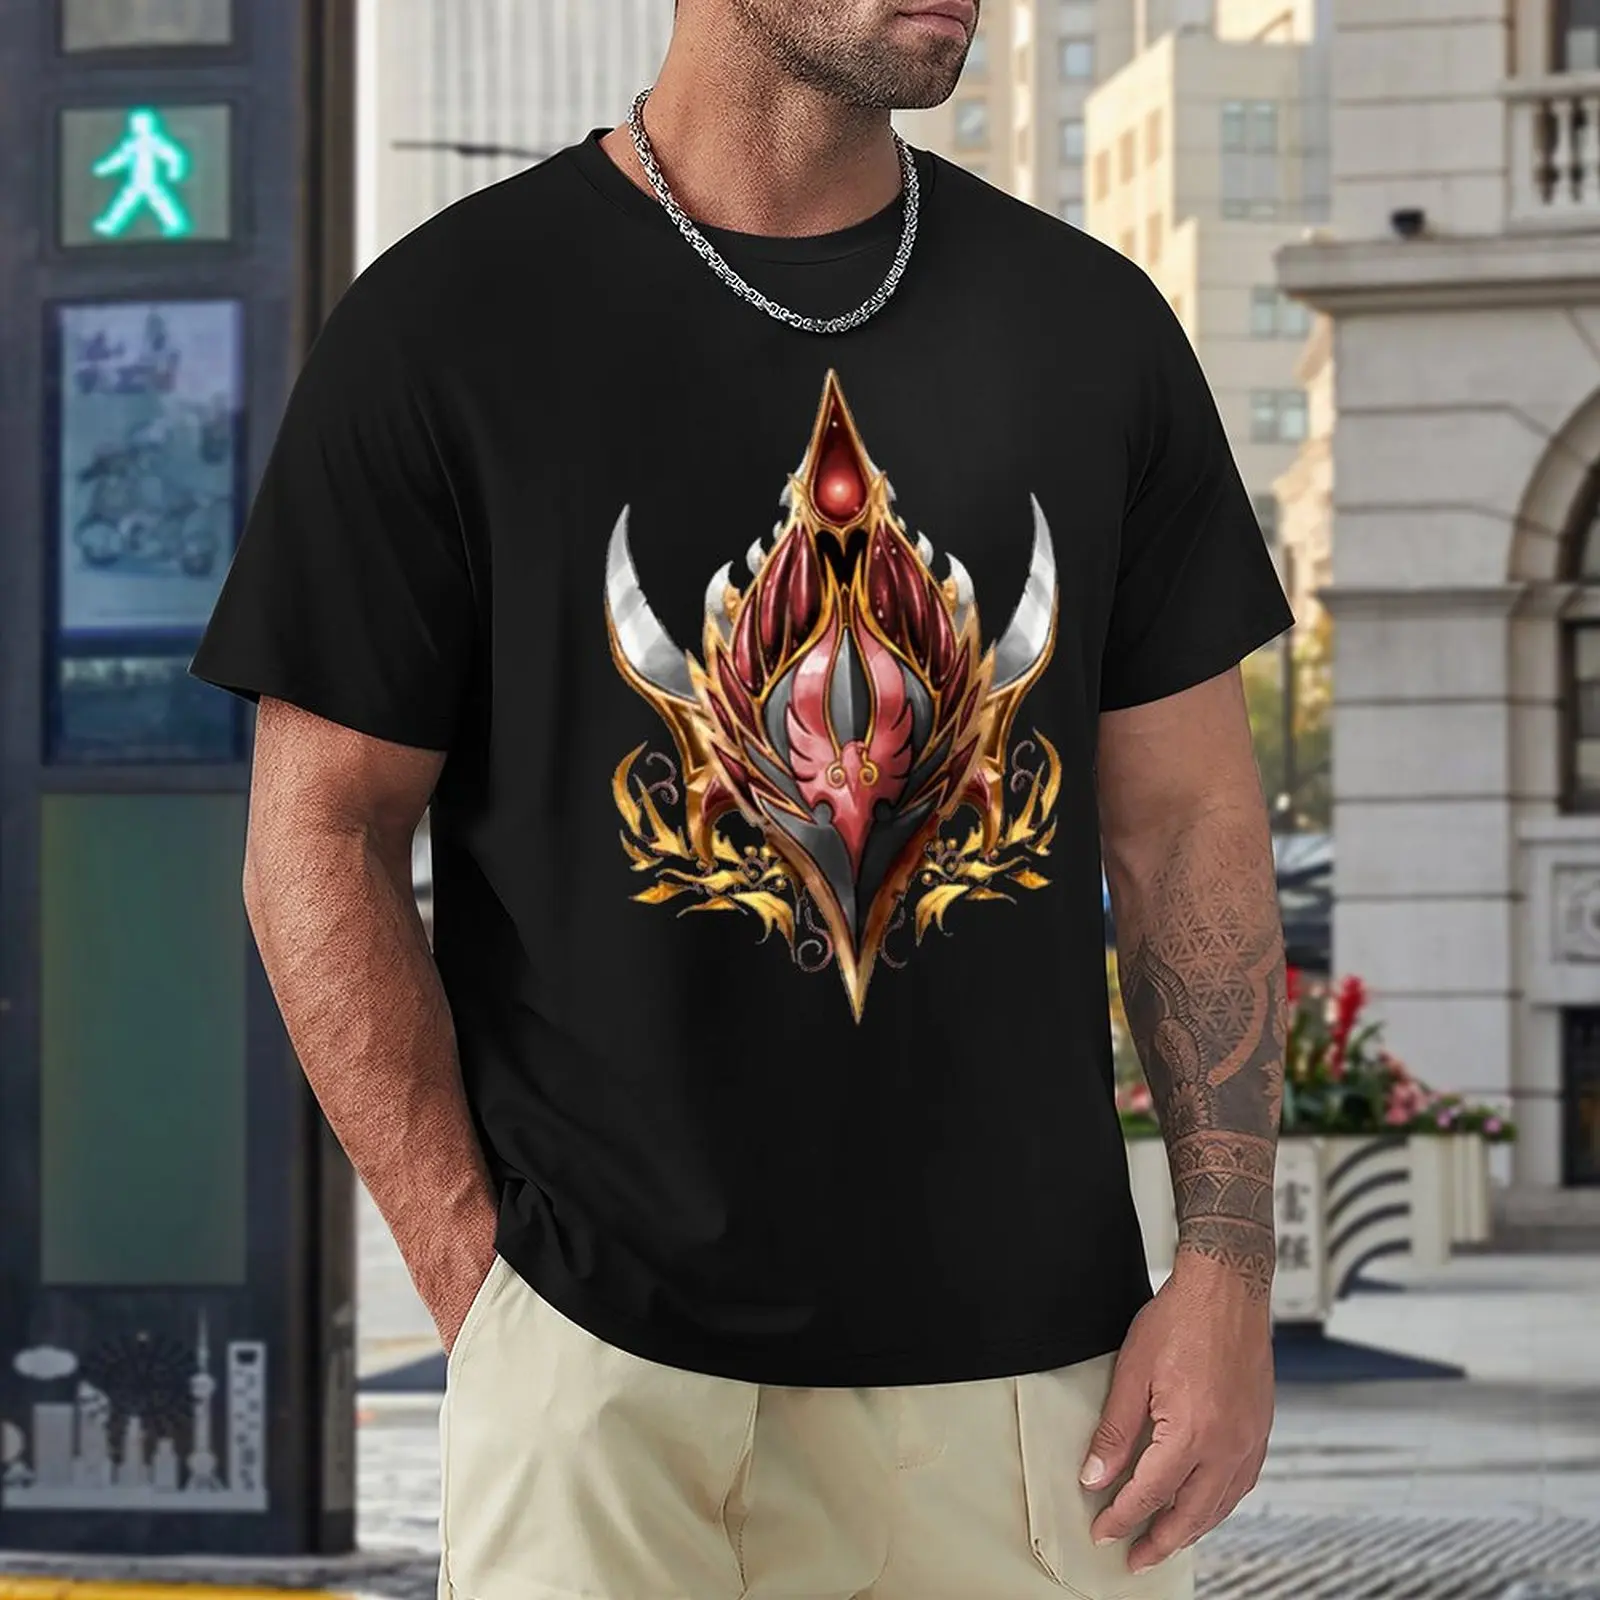 

World of Warcraft - Blood Elf Paladin T-shirts Cute T-shirt Round Neck Sports Humor Graphic Travel USA Size